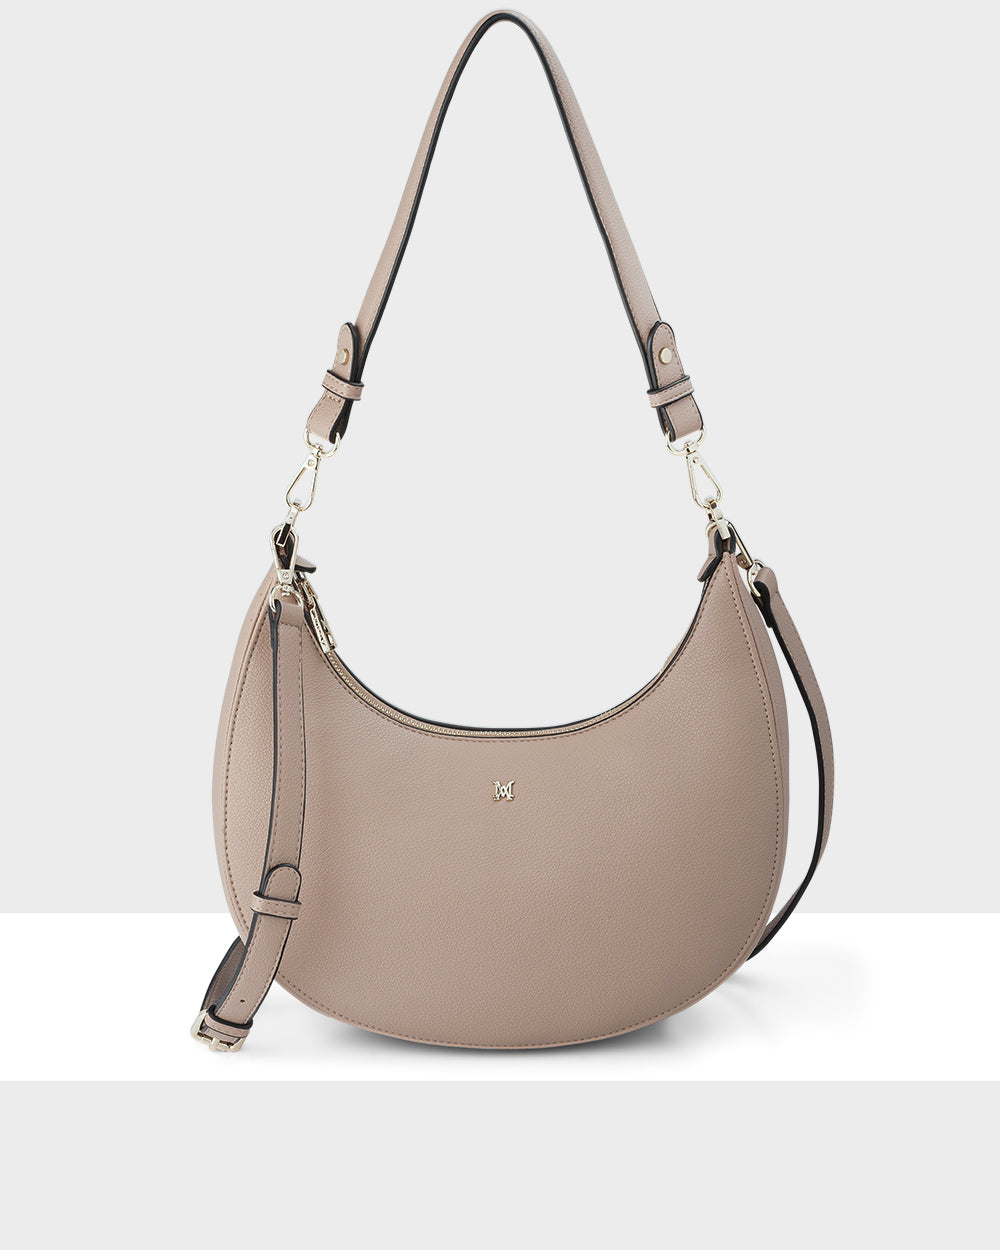 Pia Cresent Shoulder Bag With Crossbody Strap + Monogram Strap-Handbags-PEROZ Accessories